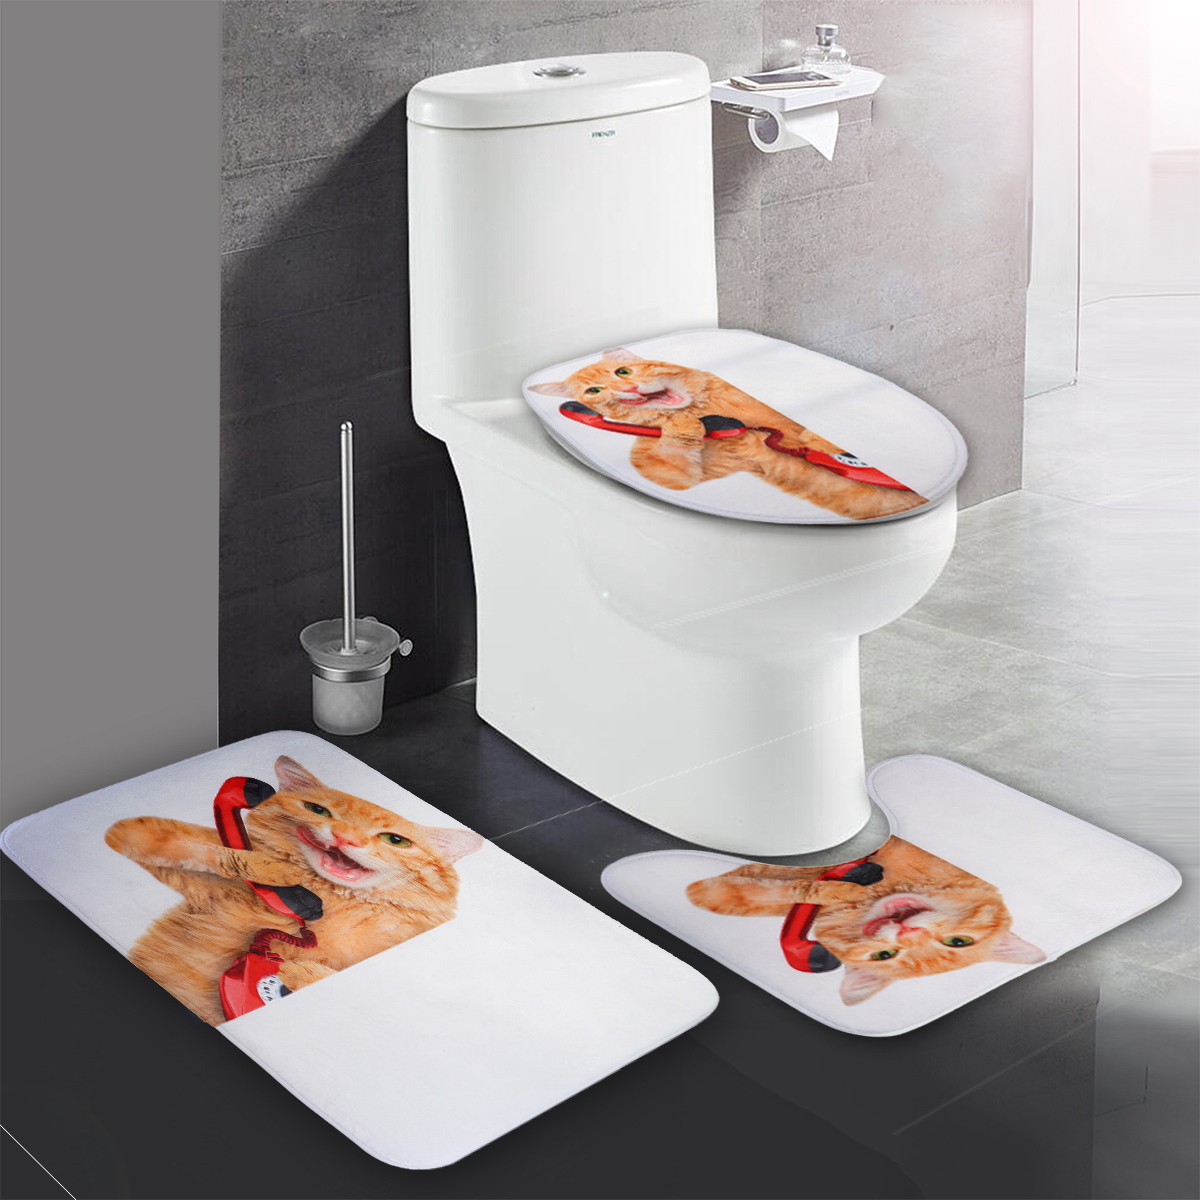 3PCS-Toilet-Seat-Covers-Funny-Cat-Bathroom-Soft-Pedestal-Rugs-Lid-Toilet-Covers-Bath-Mats-Carpets-1411649-1